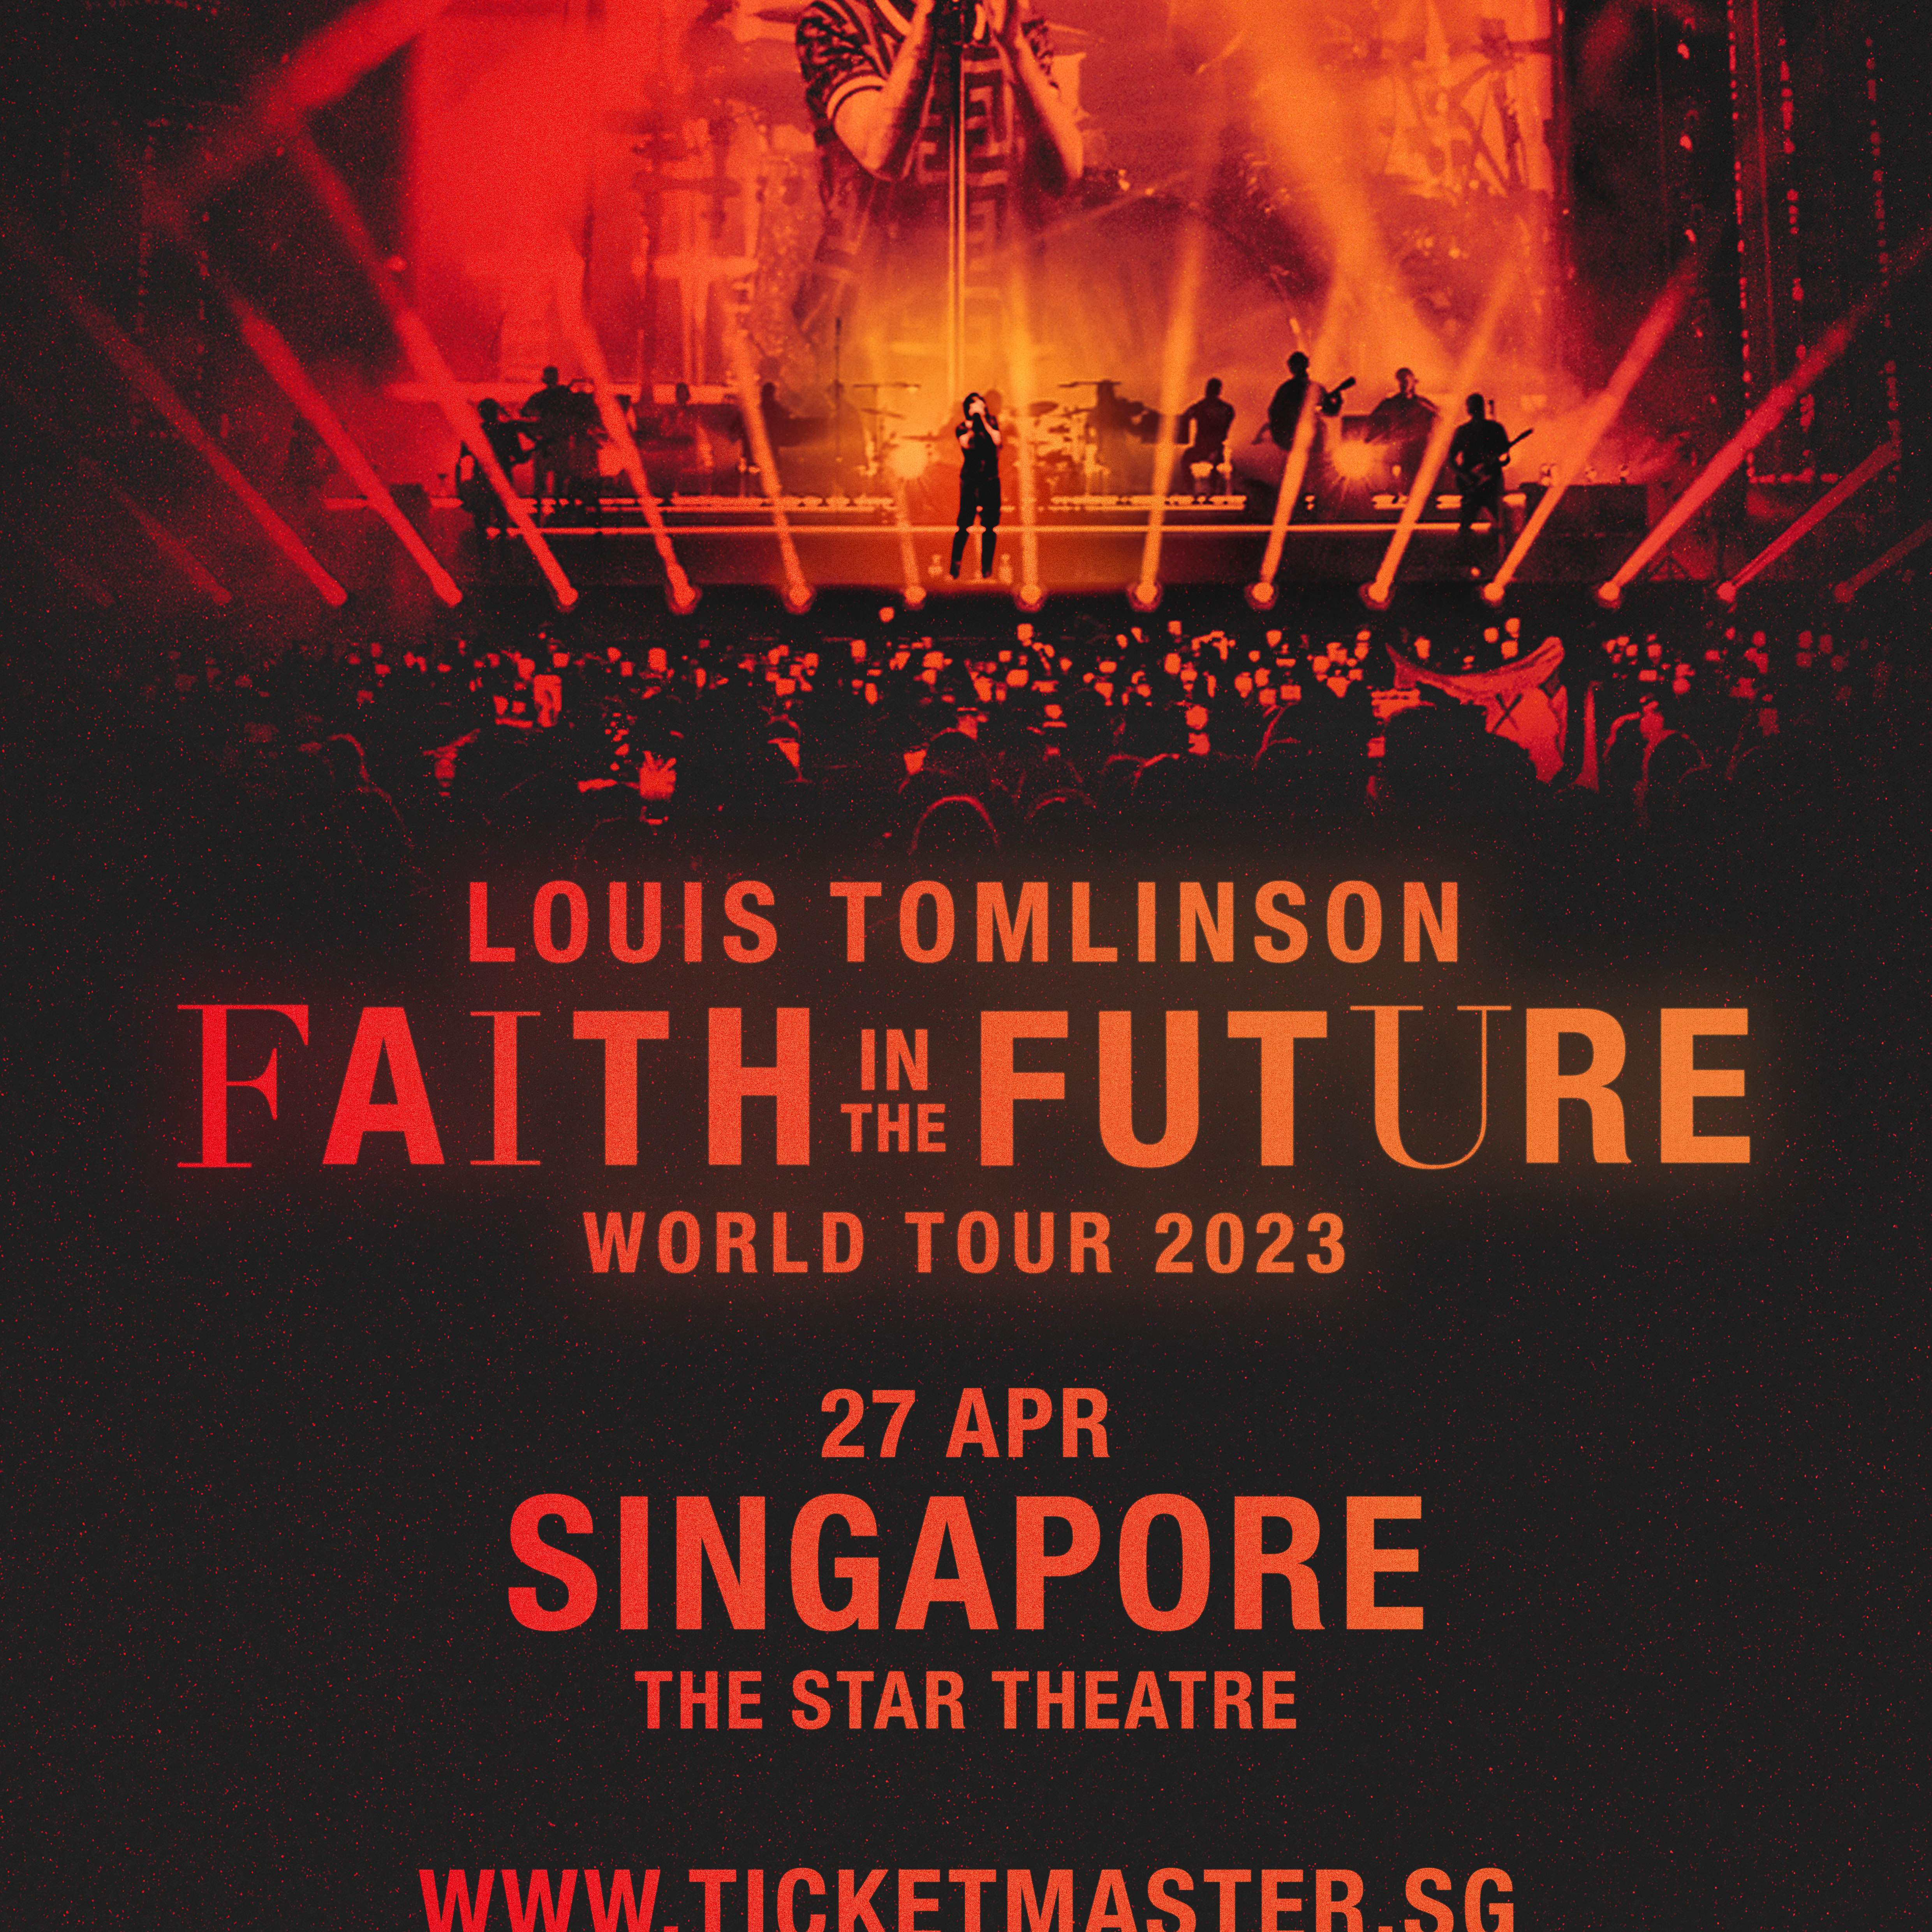 Louis Tomlinson Faith In The Future World Tour 2023 Personalized